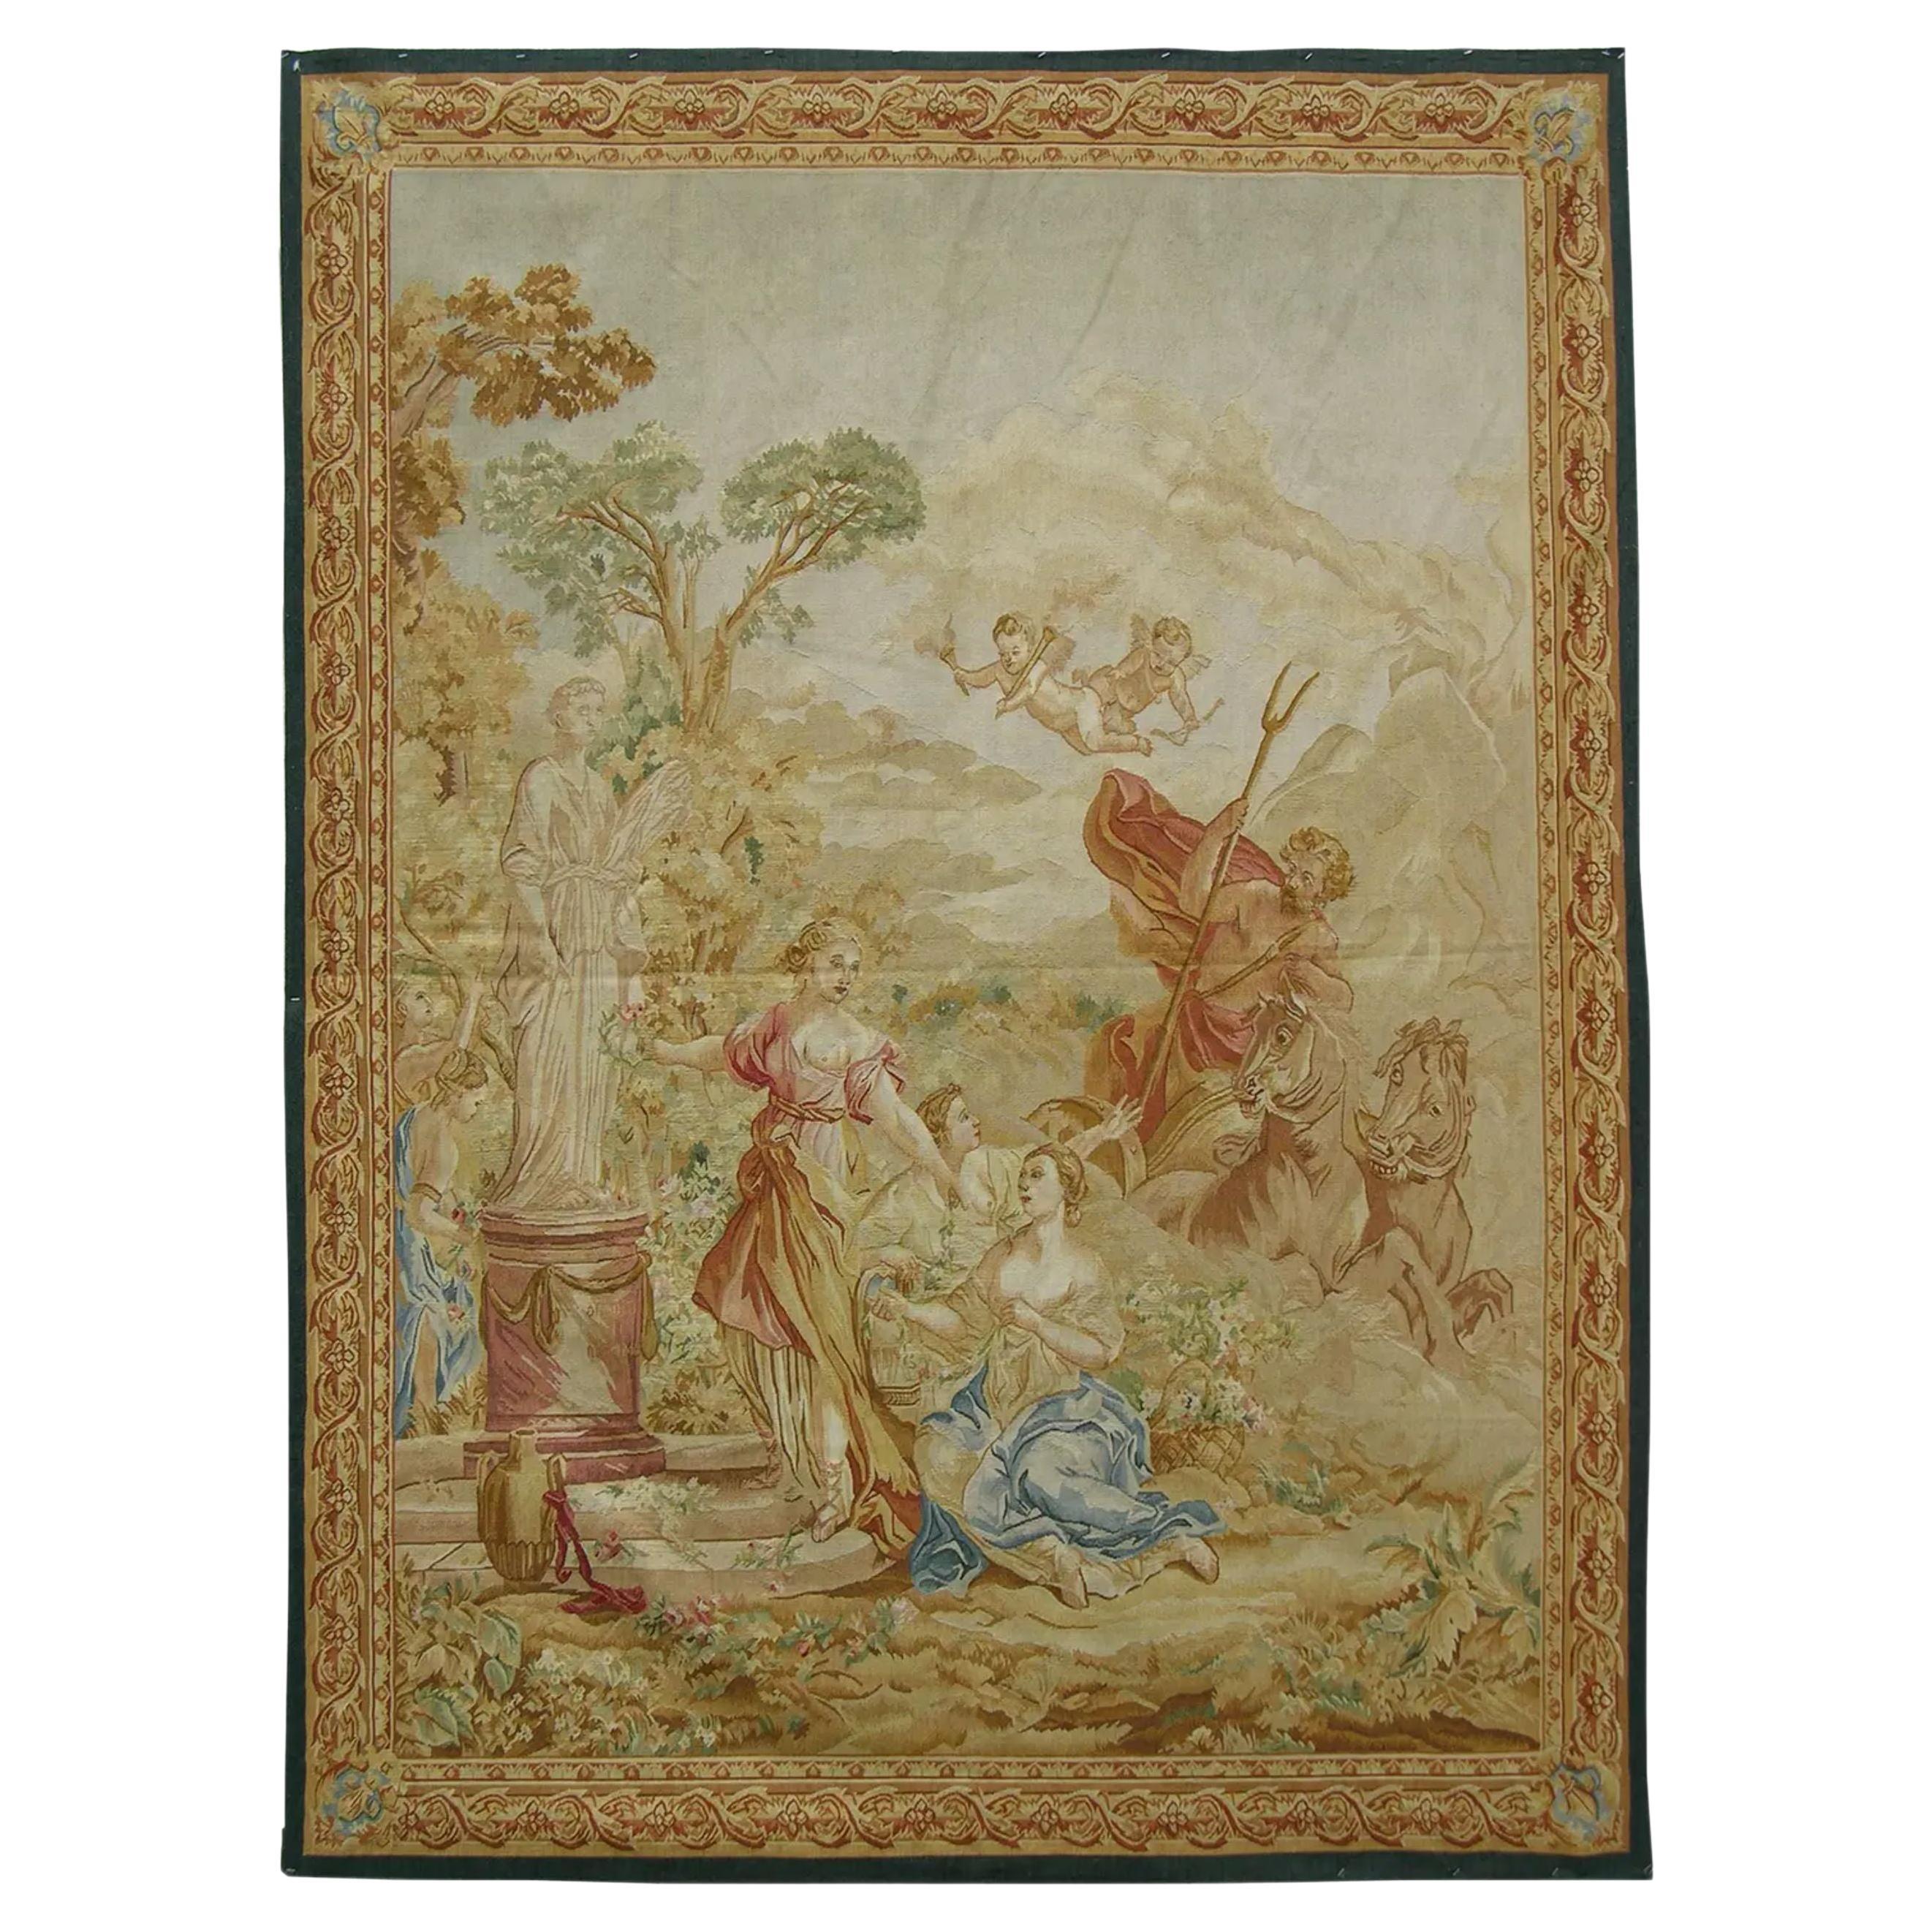 Vintage Tapestry Depicting Angels 7.2X5.4